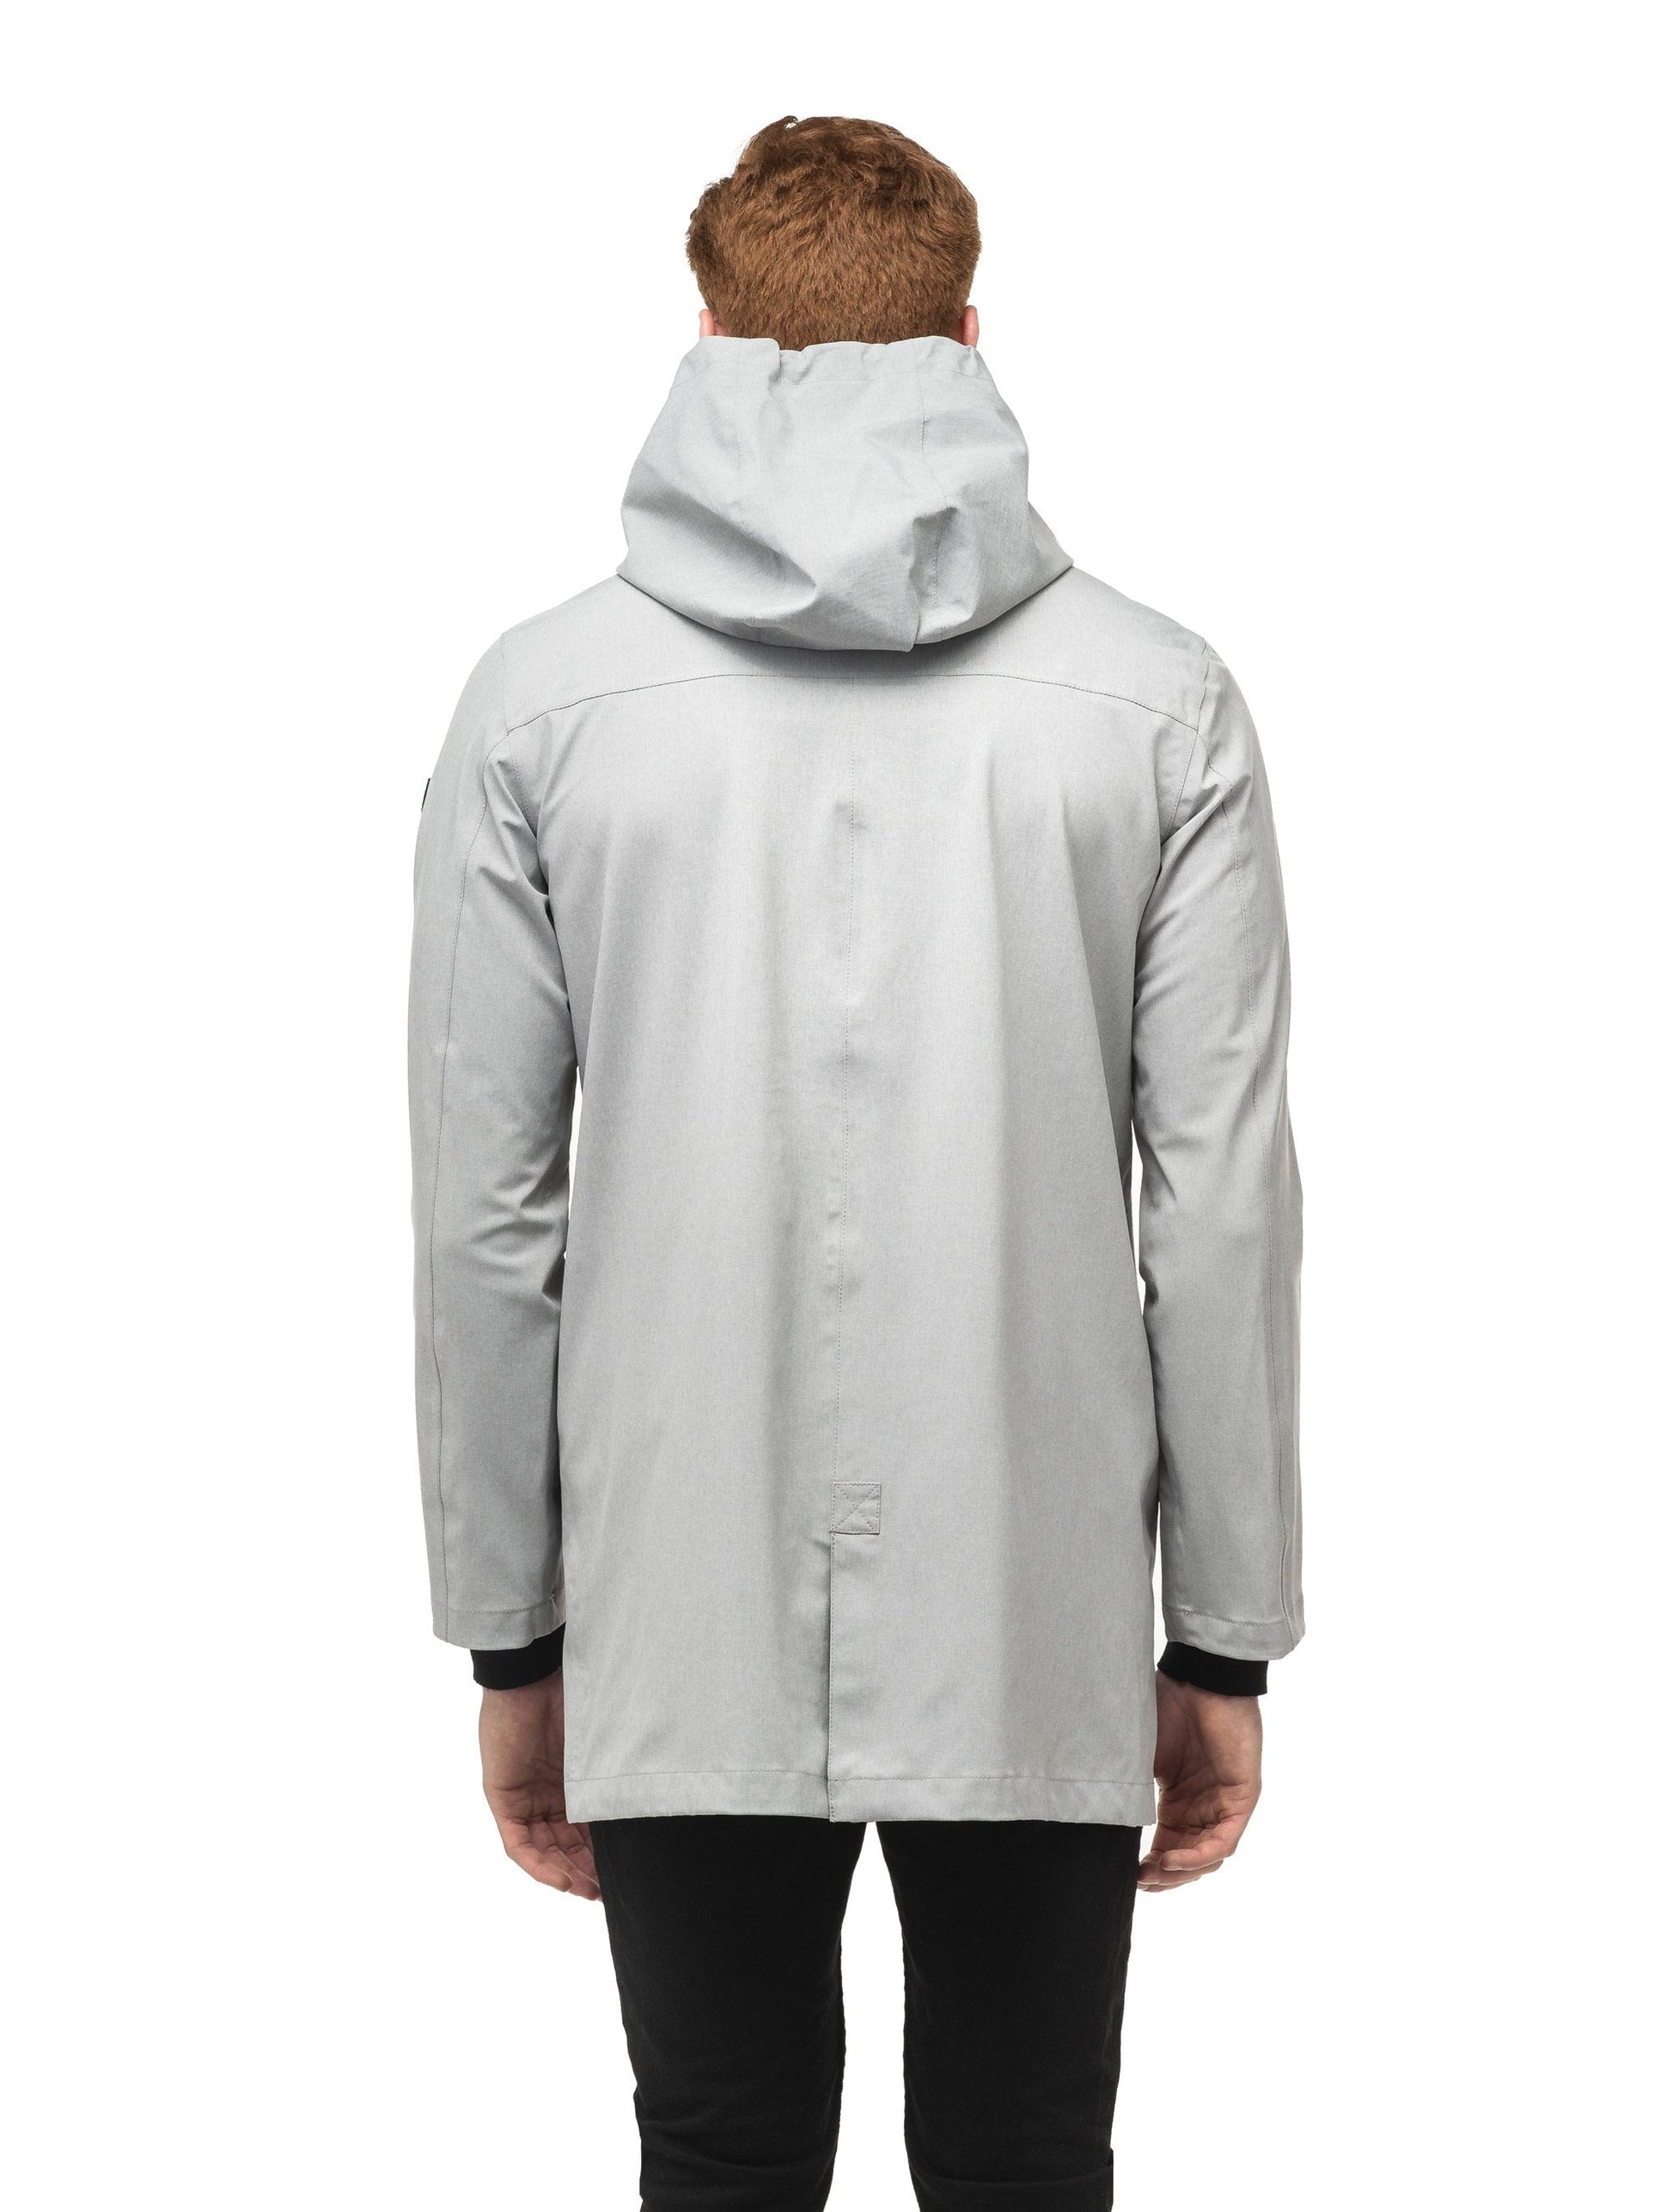 Men's thigh length rain coat with hood in Light Grey